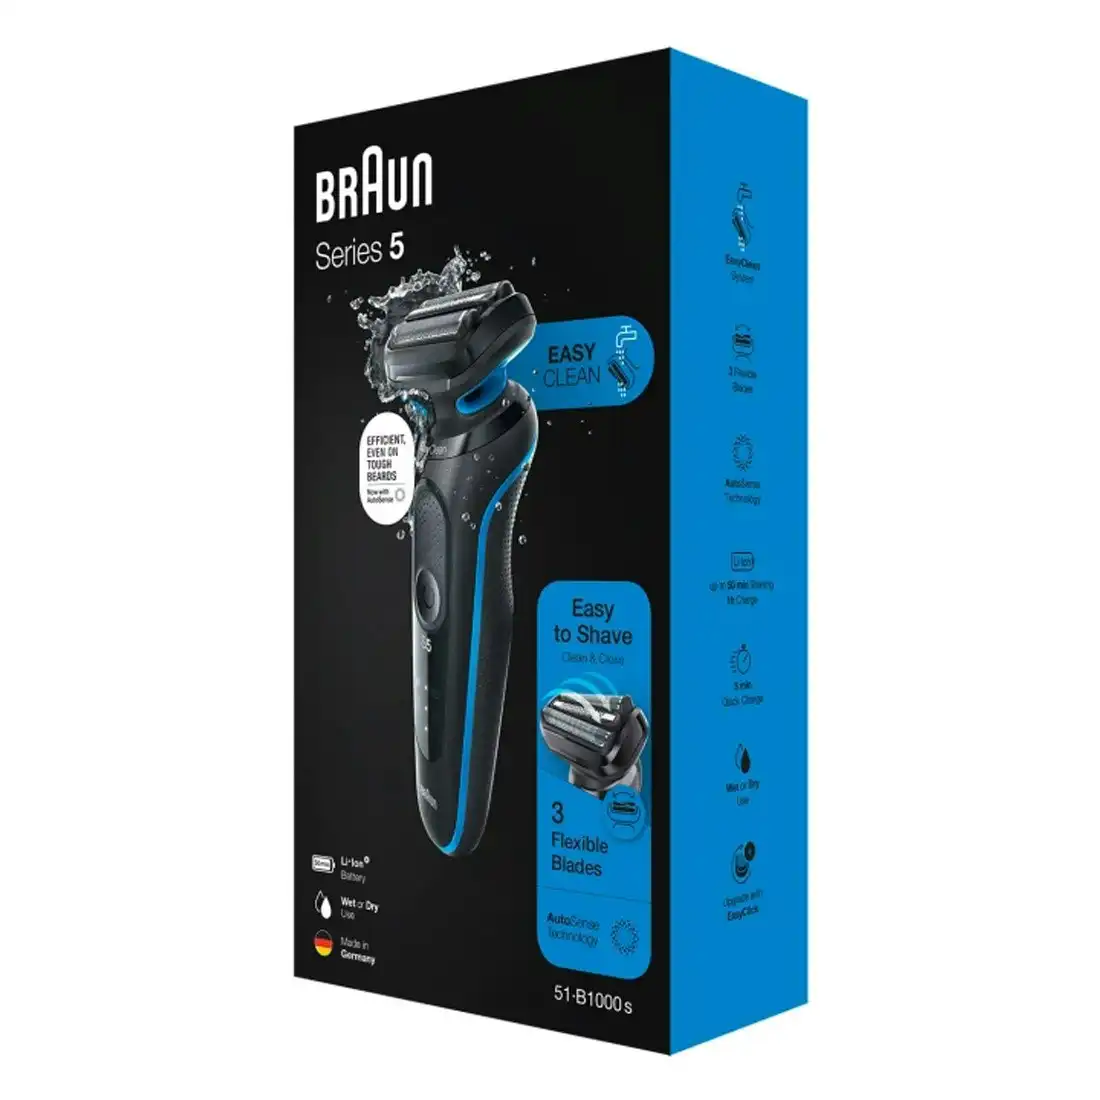 Braun Series 5 51-B1000s Wet & Dry Electric Shaver - Blue